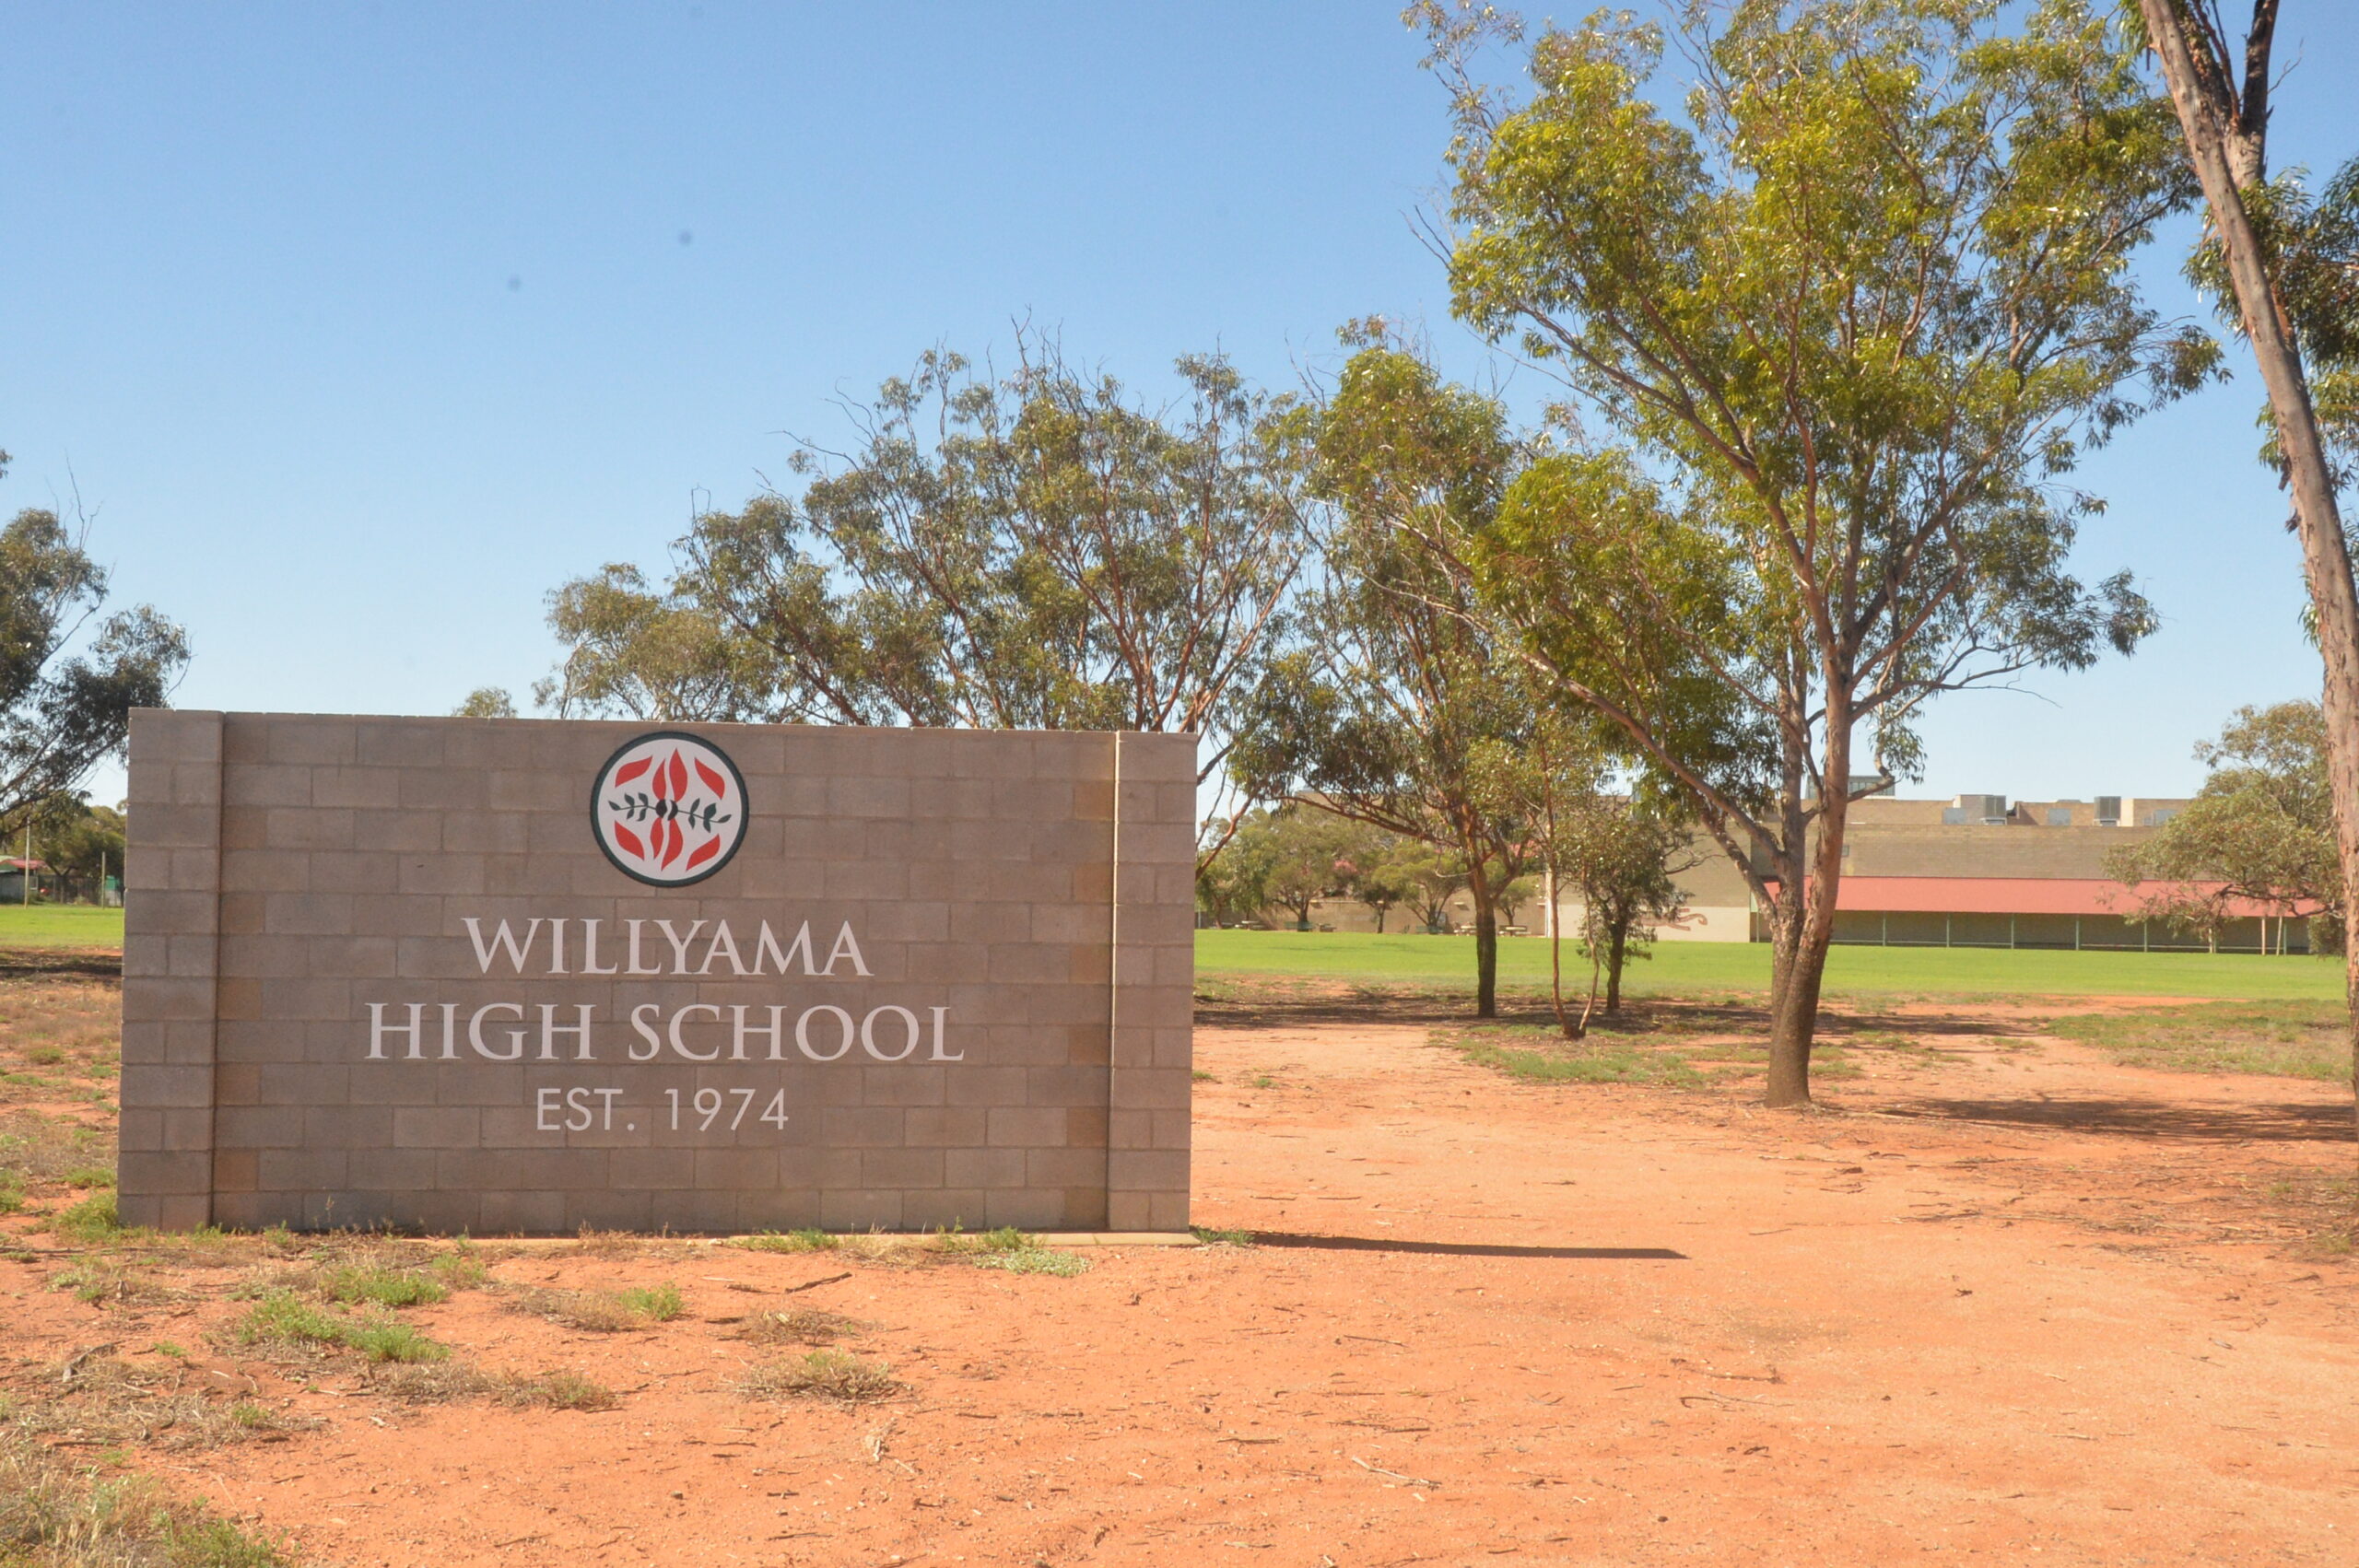 Willyama High School